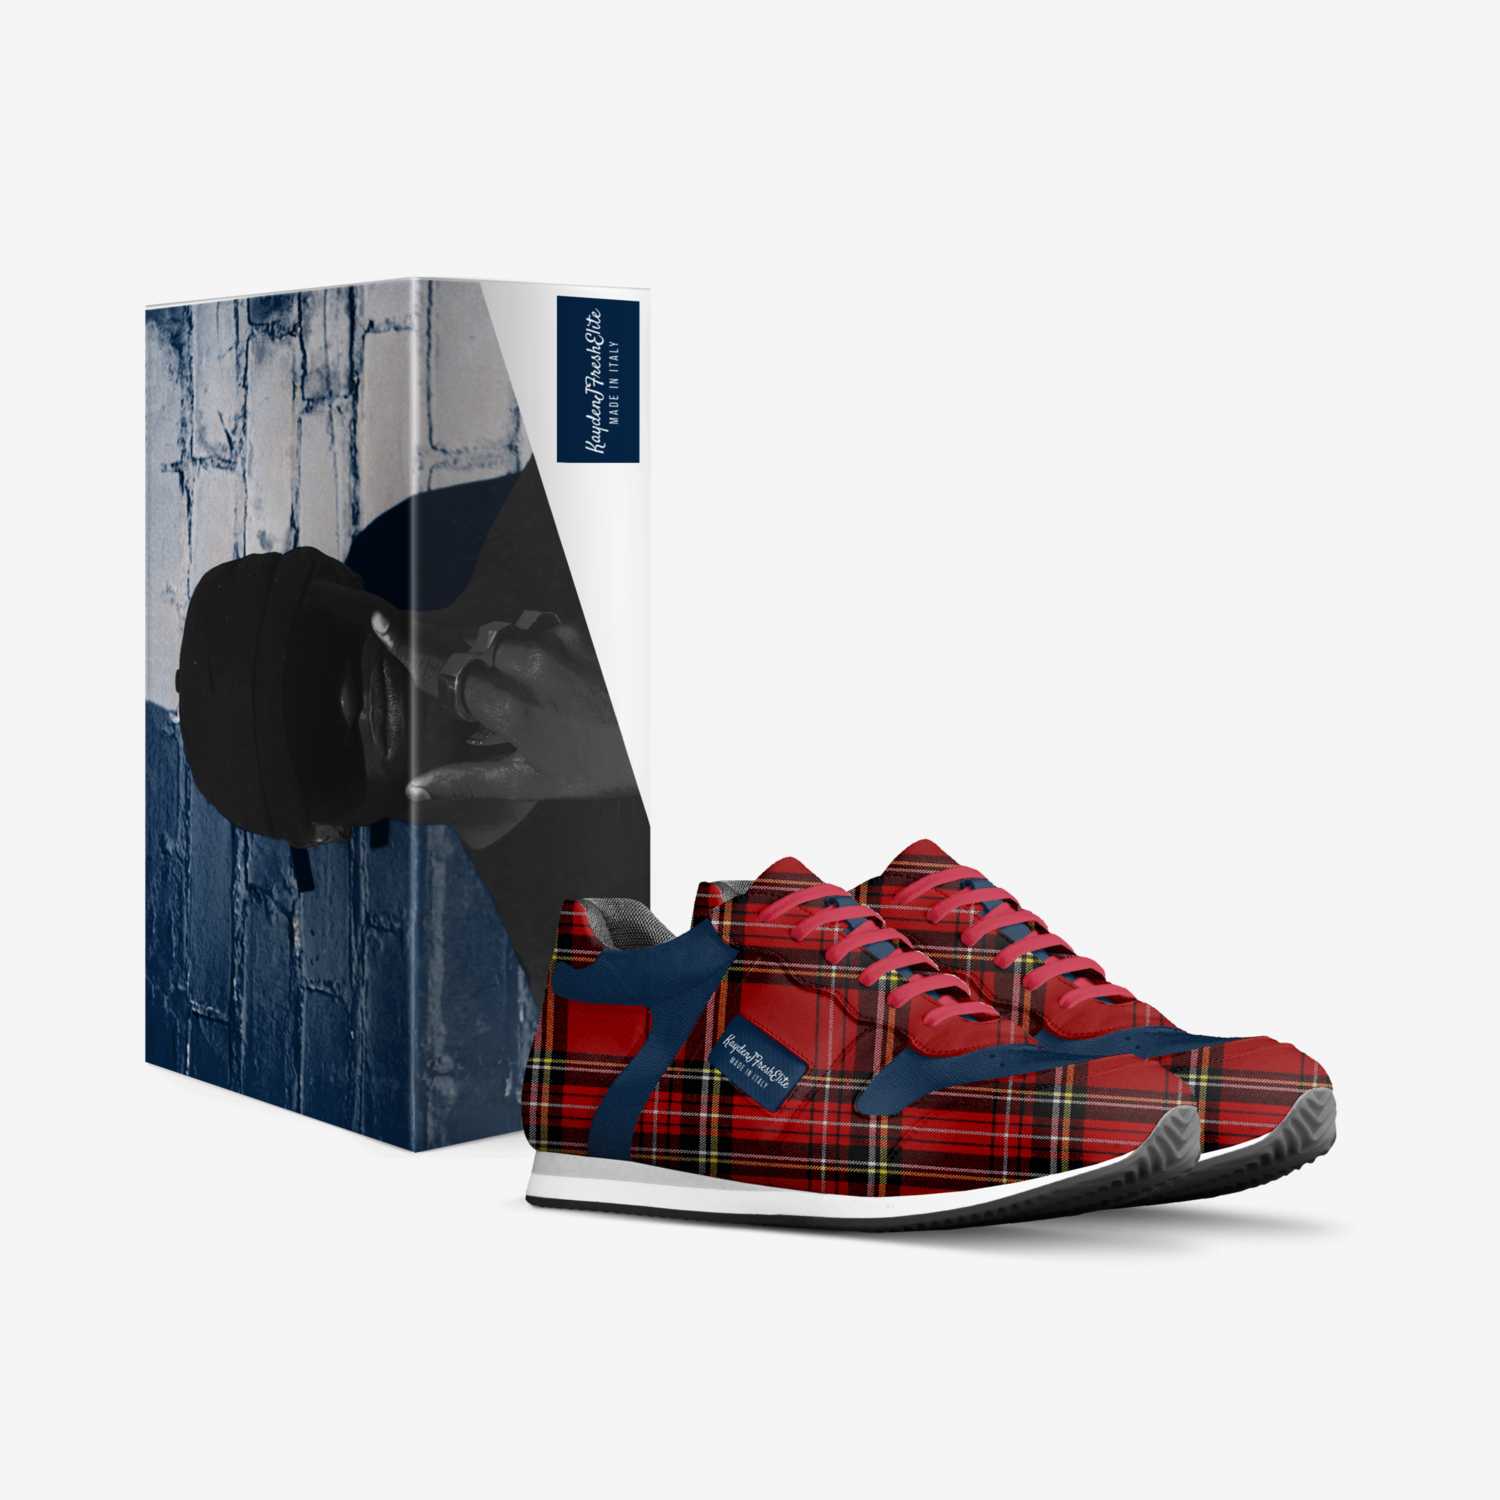 KaydenJFreshElite custom made in Italy shoes by Oscar Starr | Box view